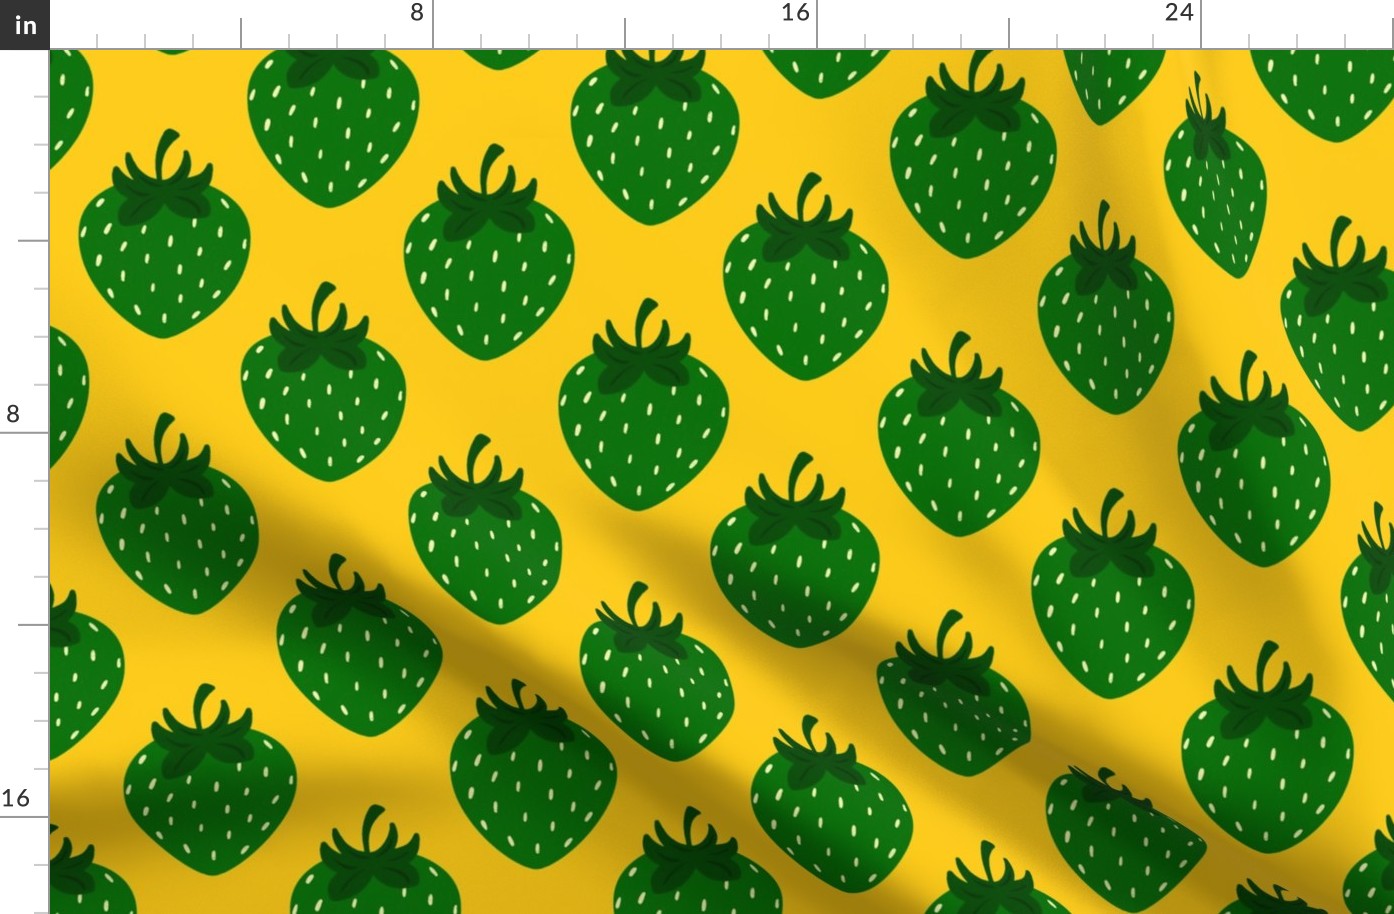 Summer Strawberries Green on Golden Yellow 6x6in